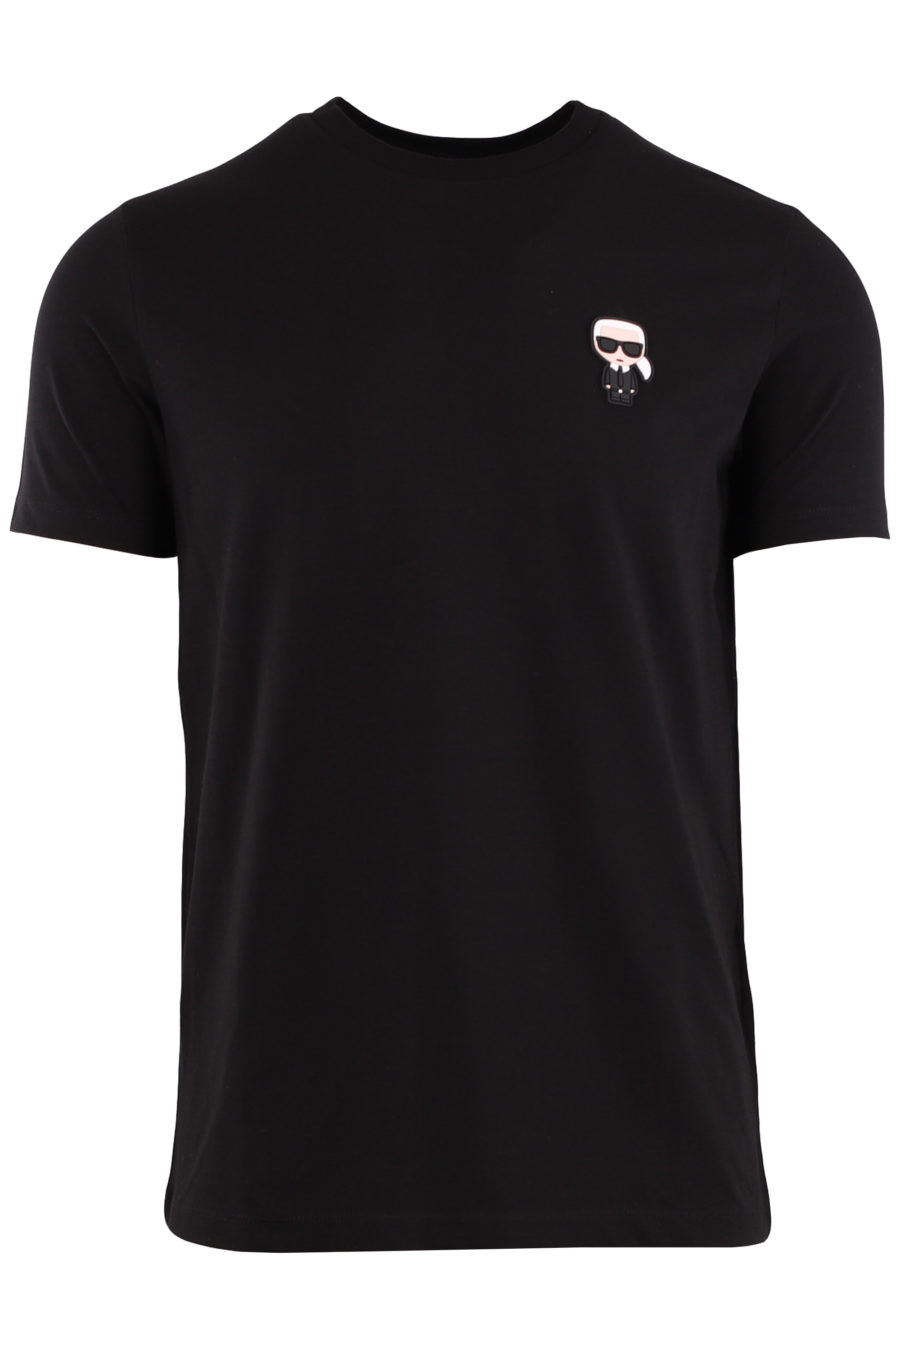 Camiseta negra con logo engomado de Karl - 262a791a37ca4f040483f56e03a24ea884495ed6